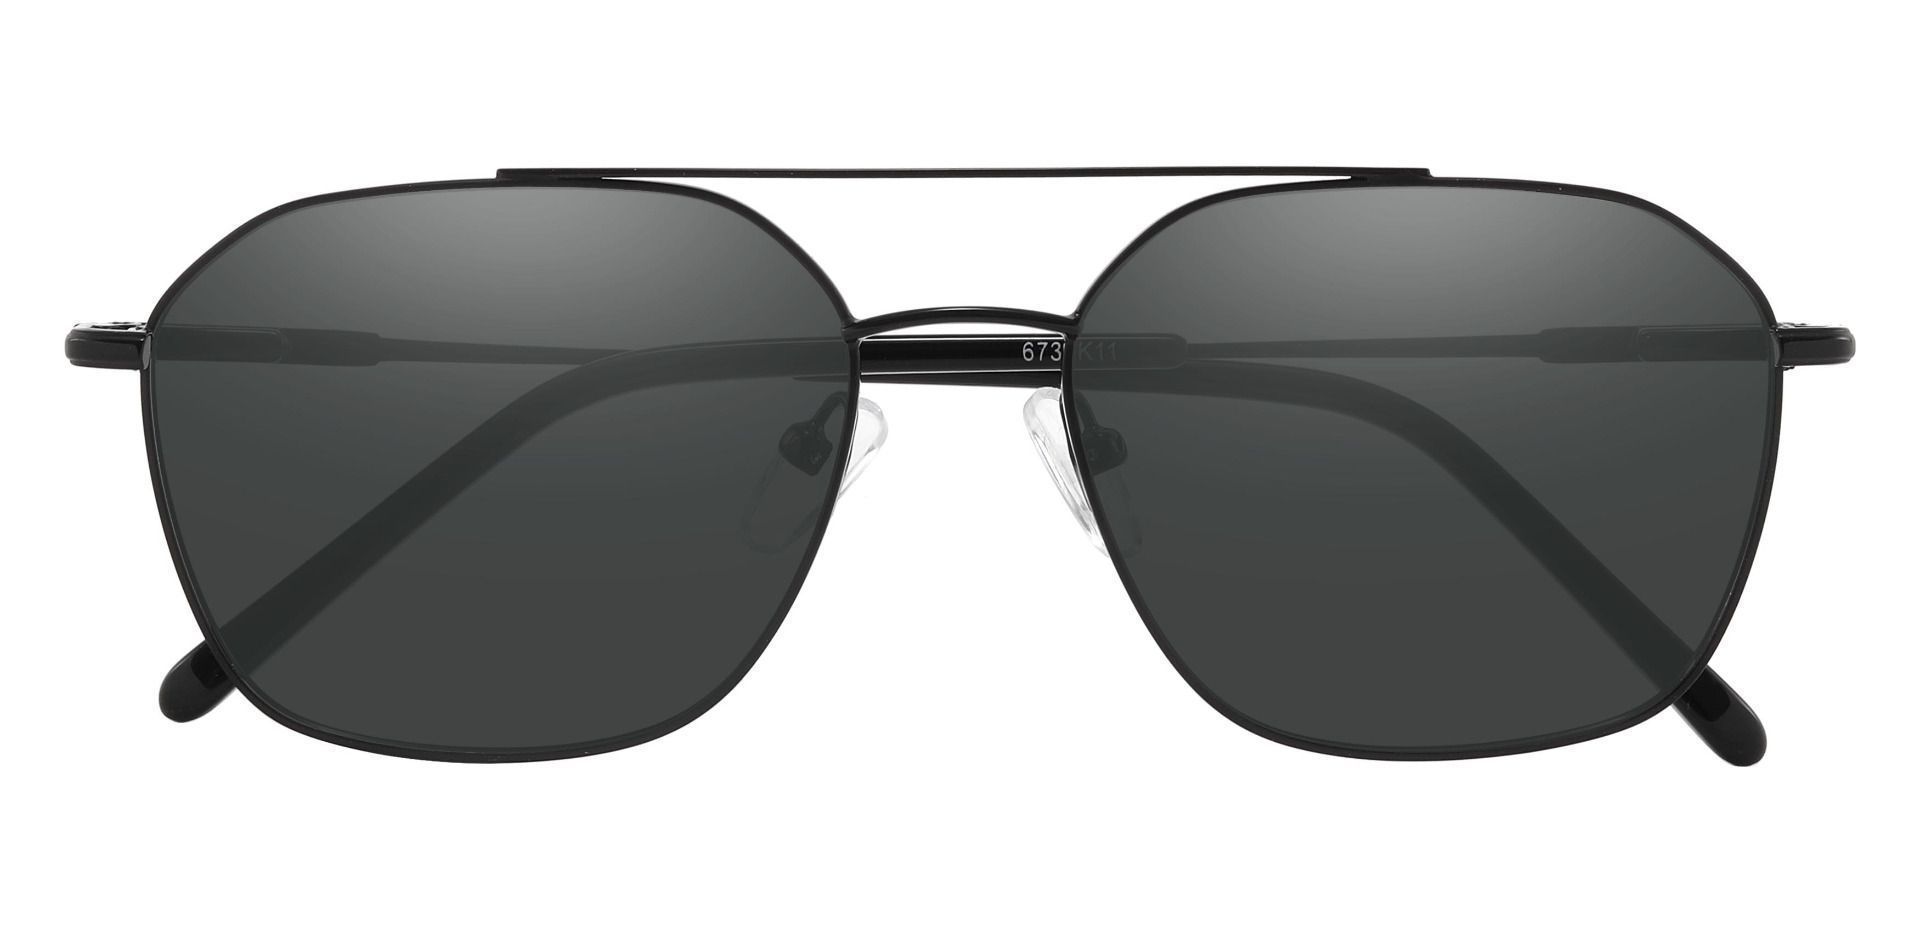 Harvey Aviator Progressive Sunglasses - Black Frame With Gray Lenses